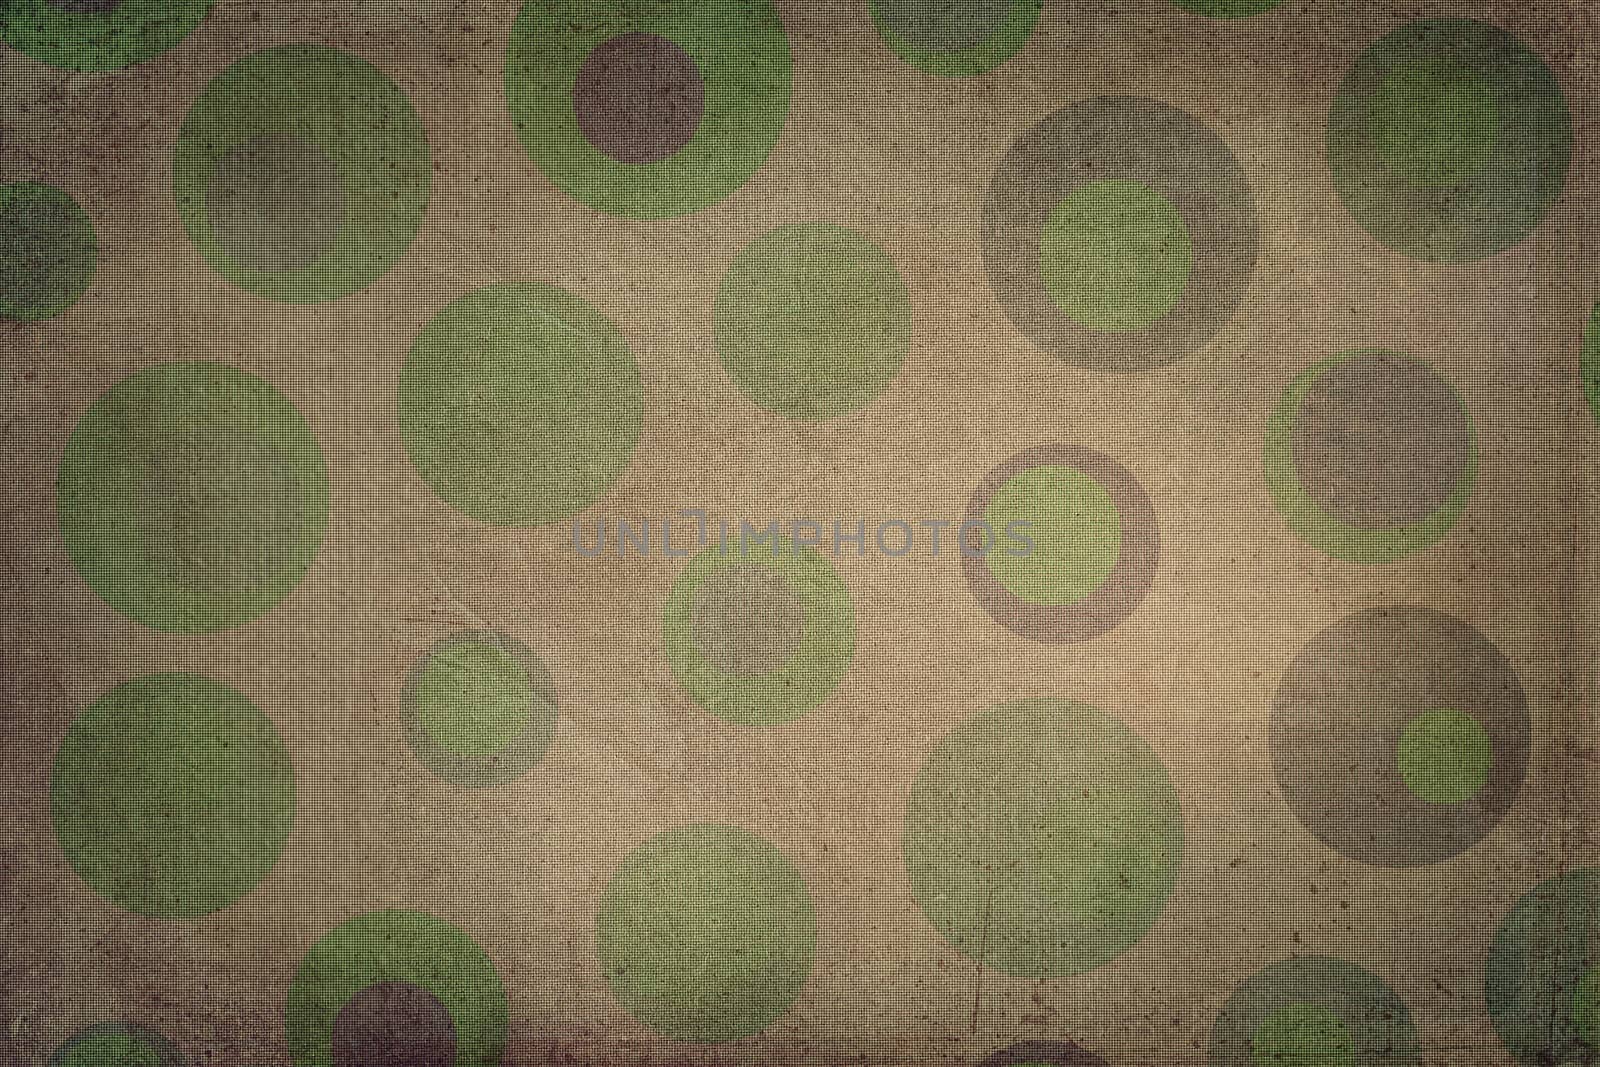 Soft Green Dots Texture by MaxalTamor